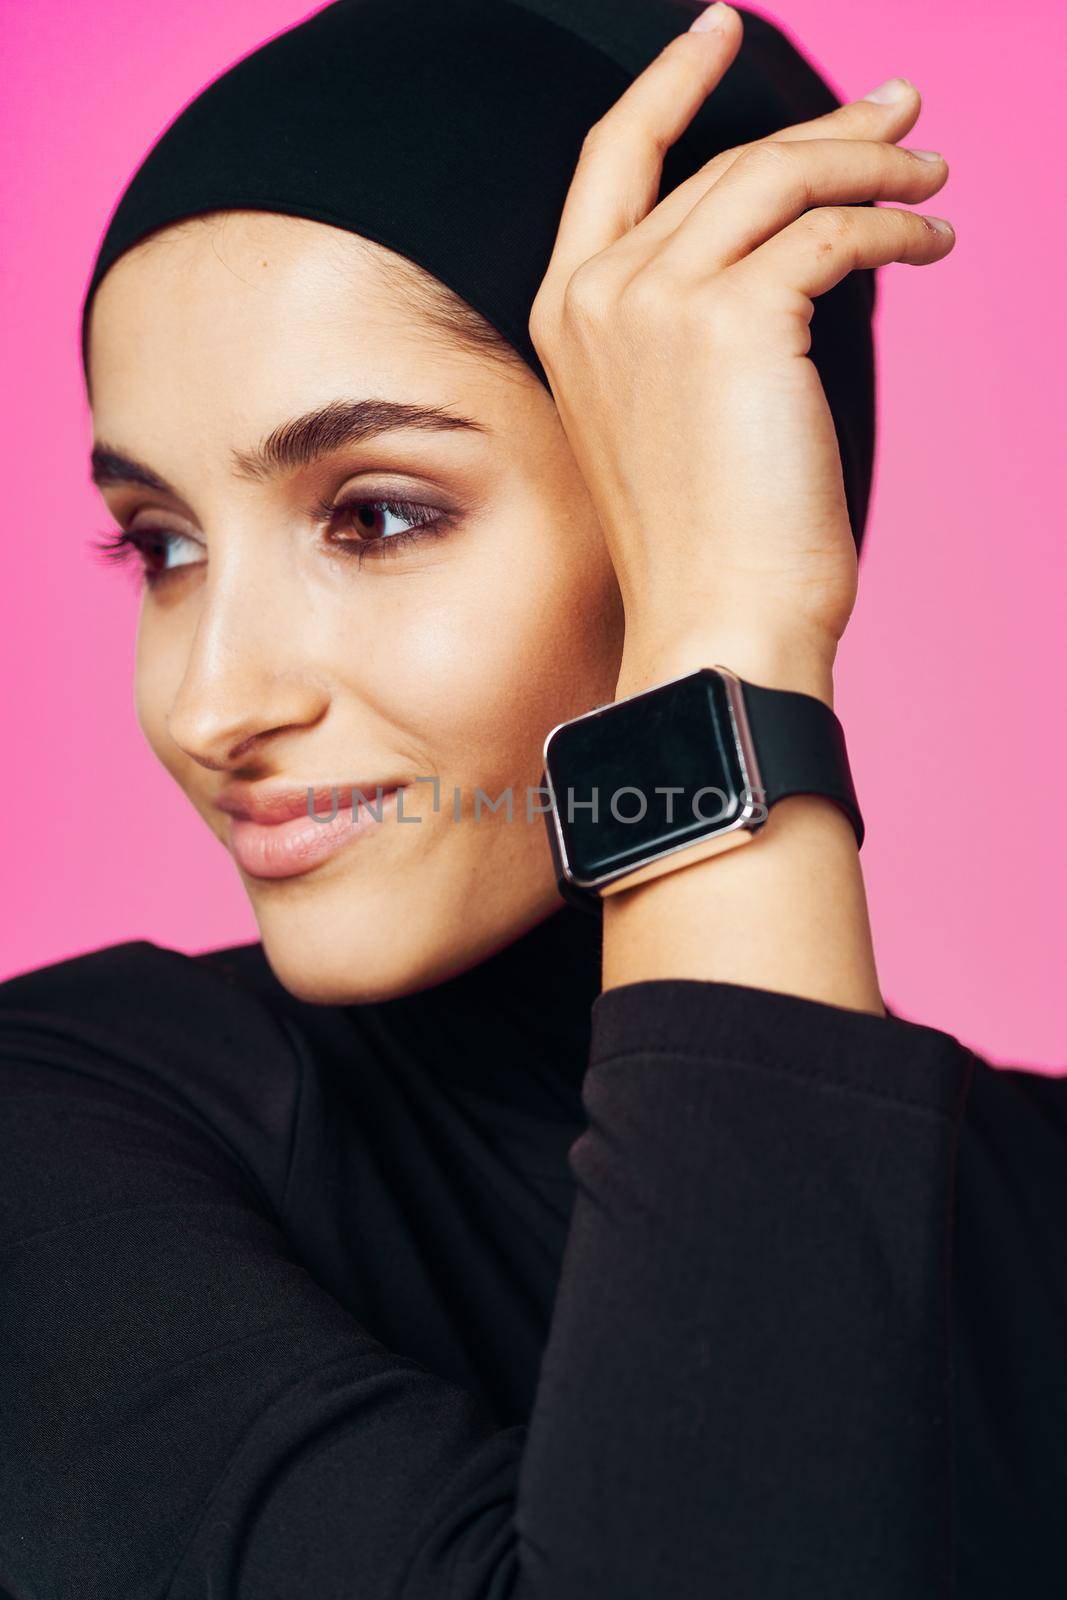 muslim woman with smart watch technology gadget pink background by Vichizh